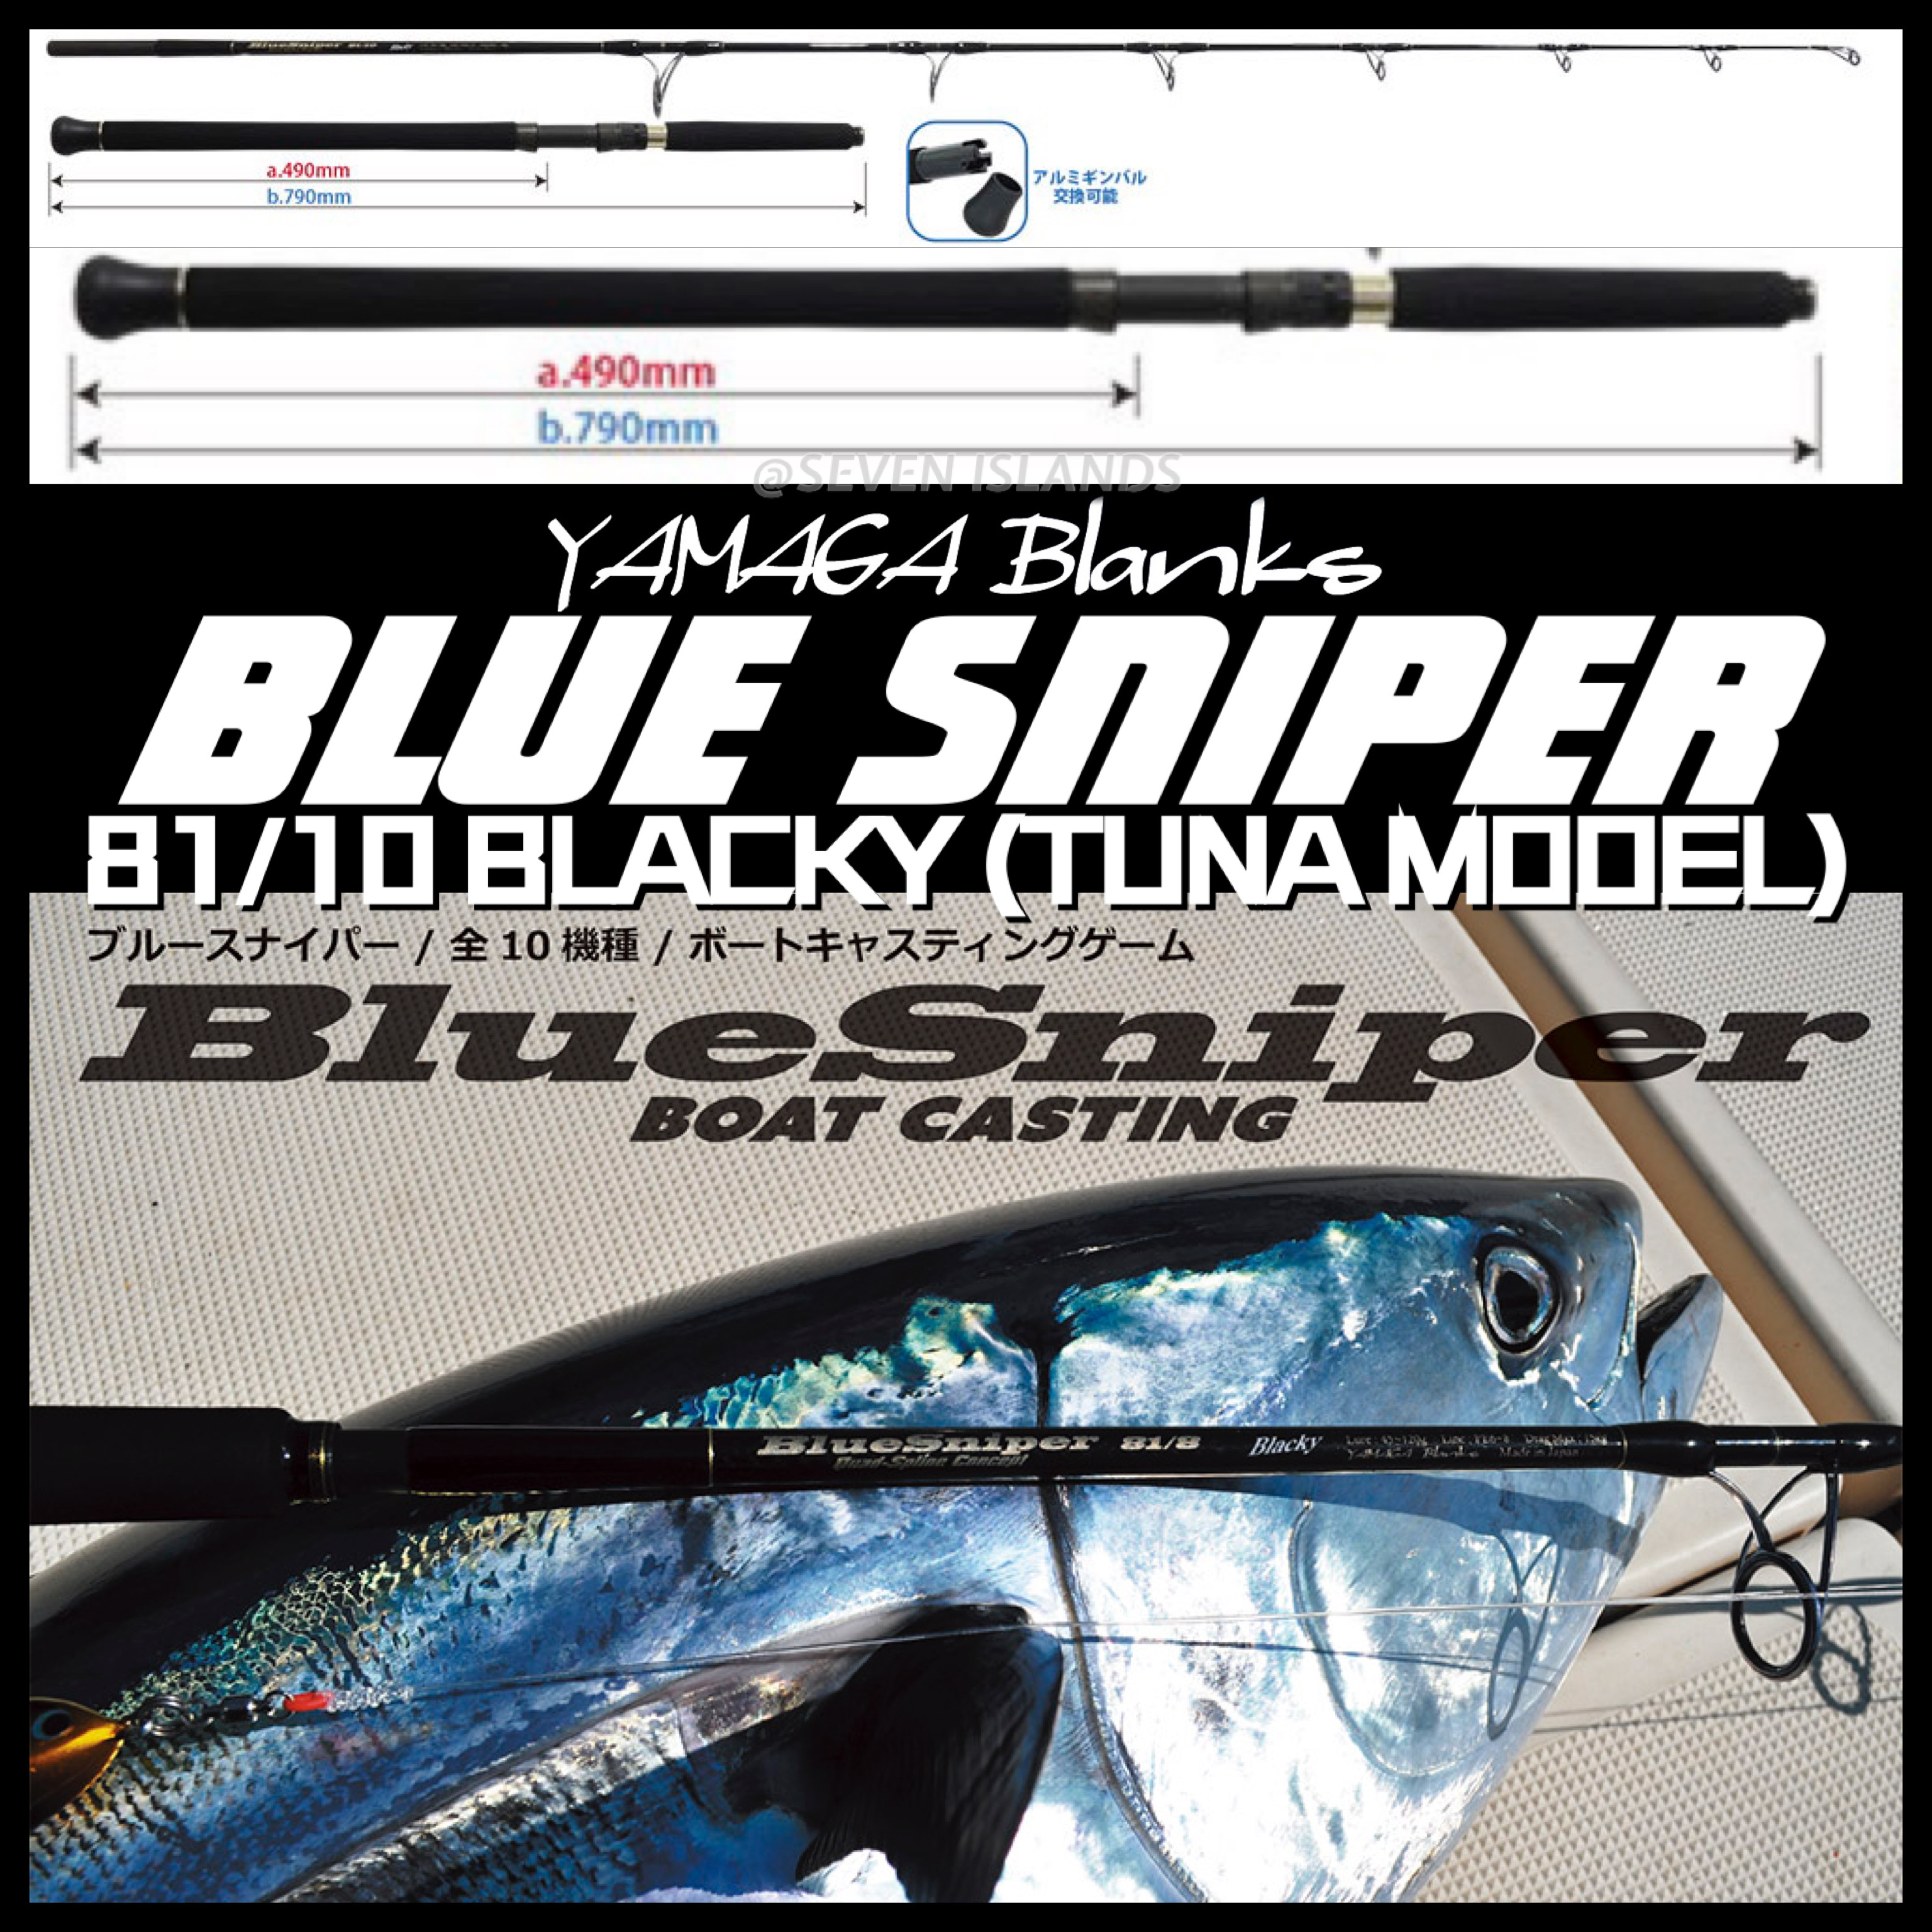 YAMAGA Blanks  BlueSniper 81/6 Blacky